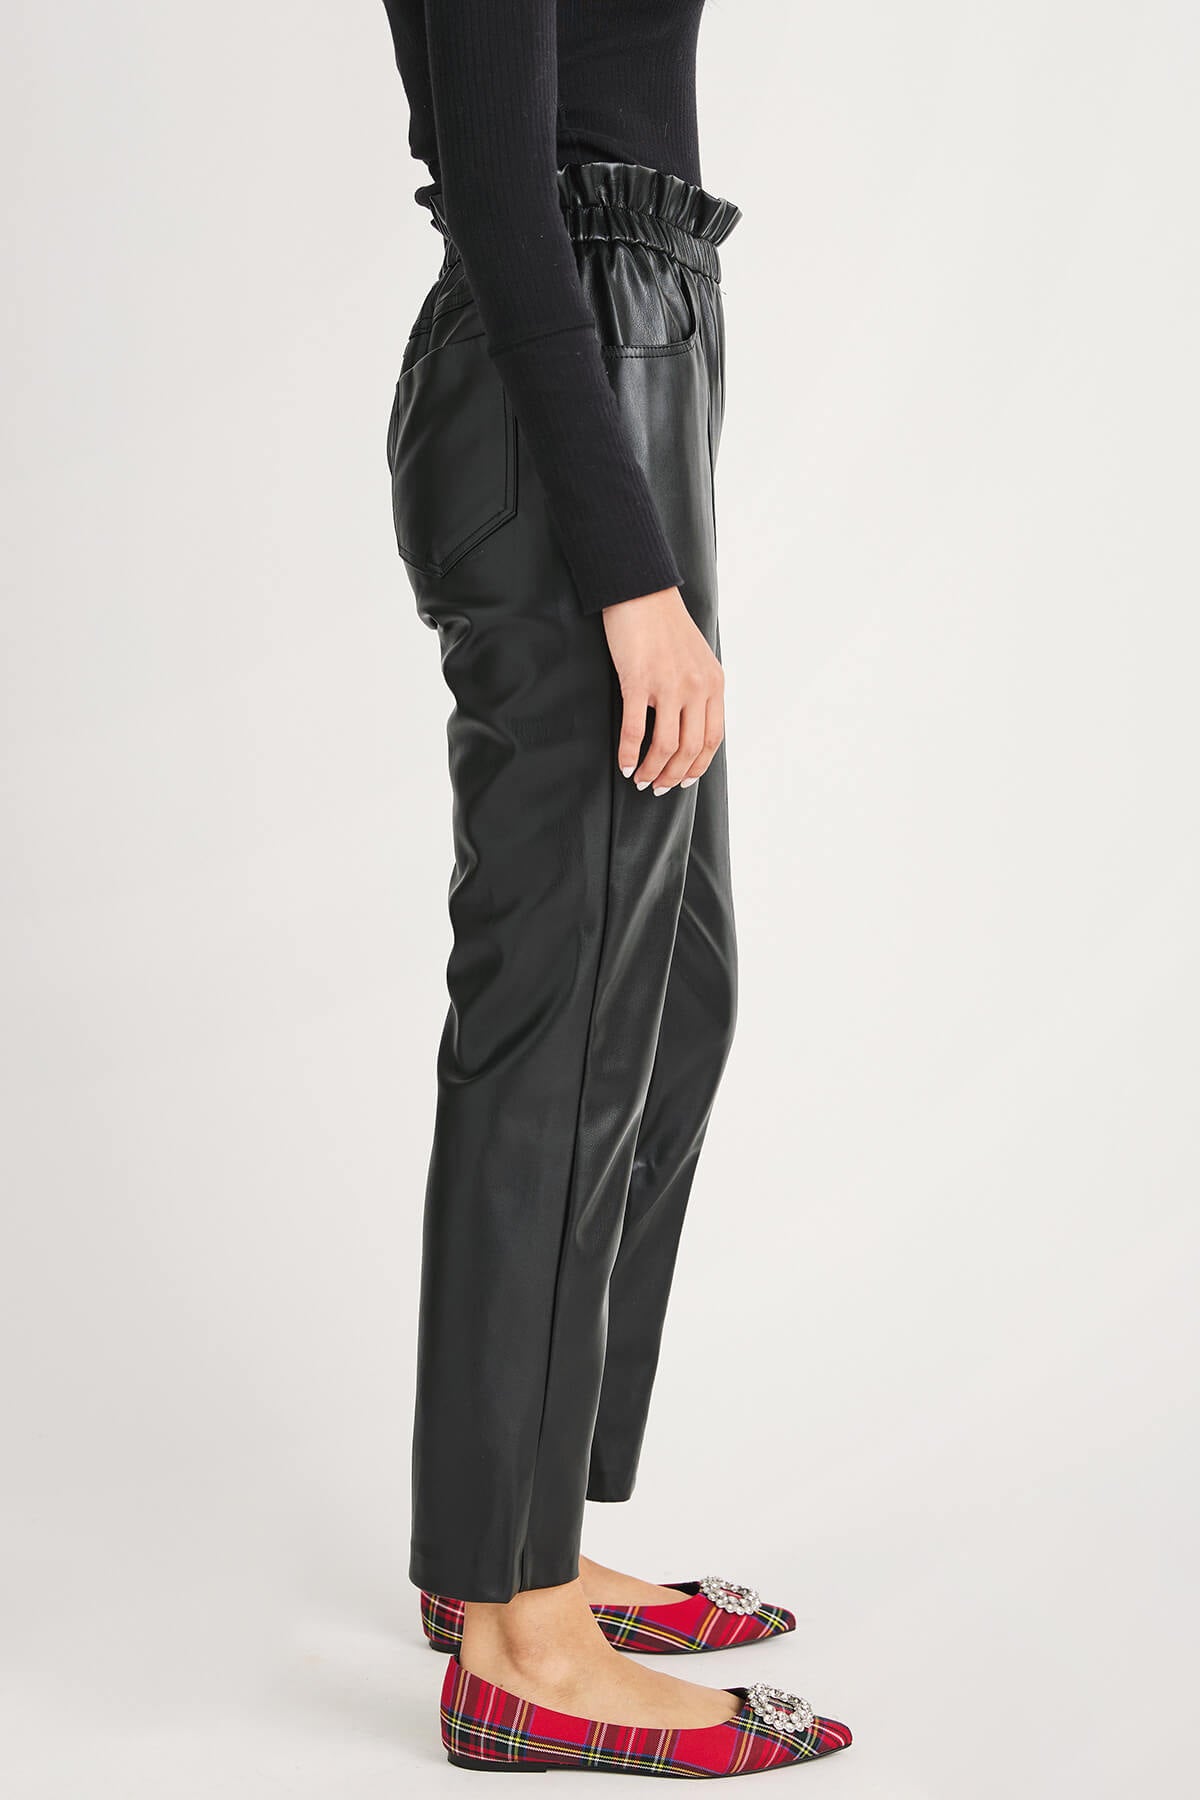 Elan Elastic Ruffle Waistband Faux Leather Pants